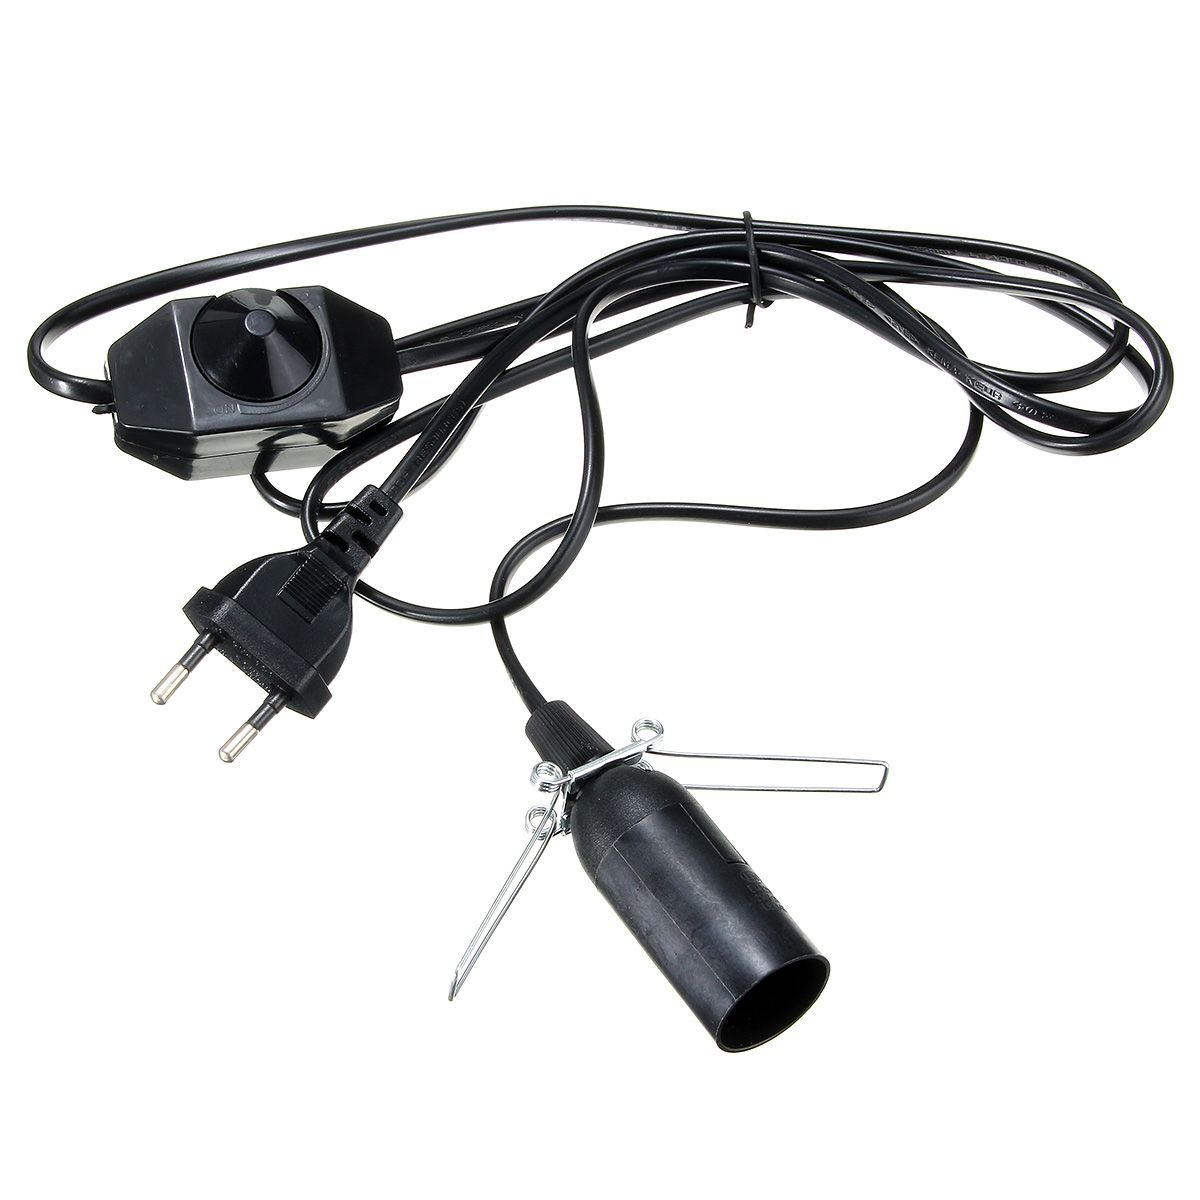 2M-E14-Black-Light-Bulb-Electric-Power-Cord-Holder-Adapter-Socket-for-Himalayan-Salt-Lamp-1339899